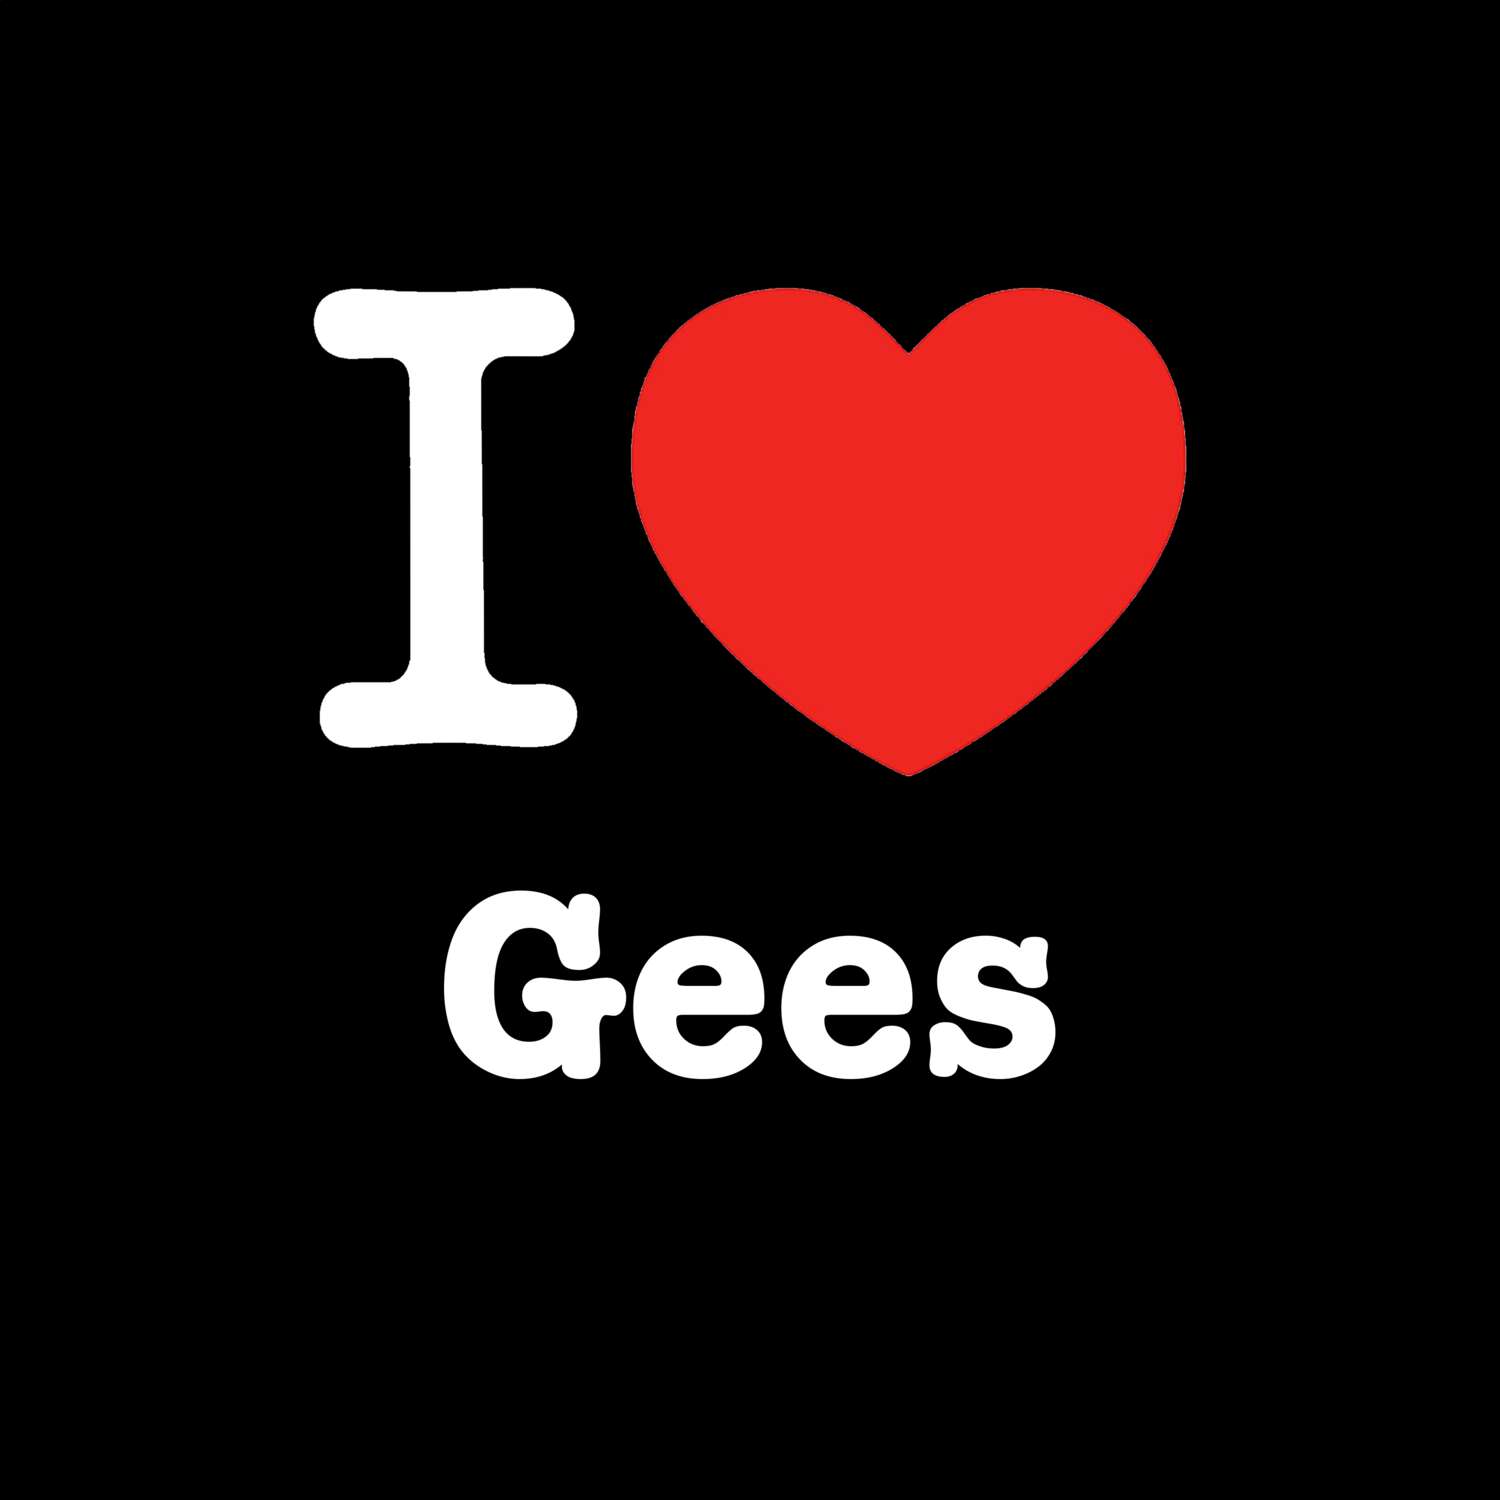 Gees T-Shirt »I love«